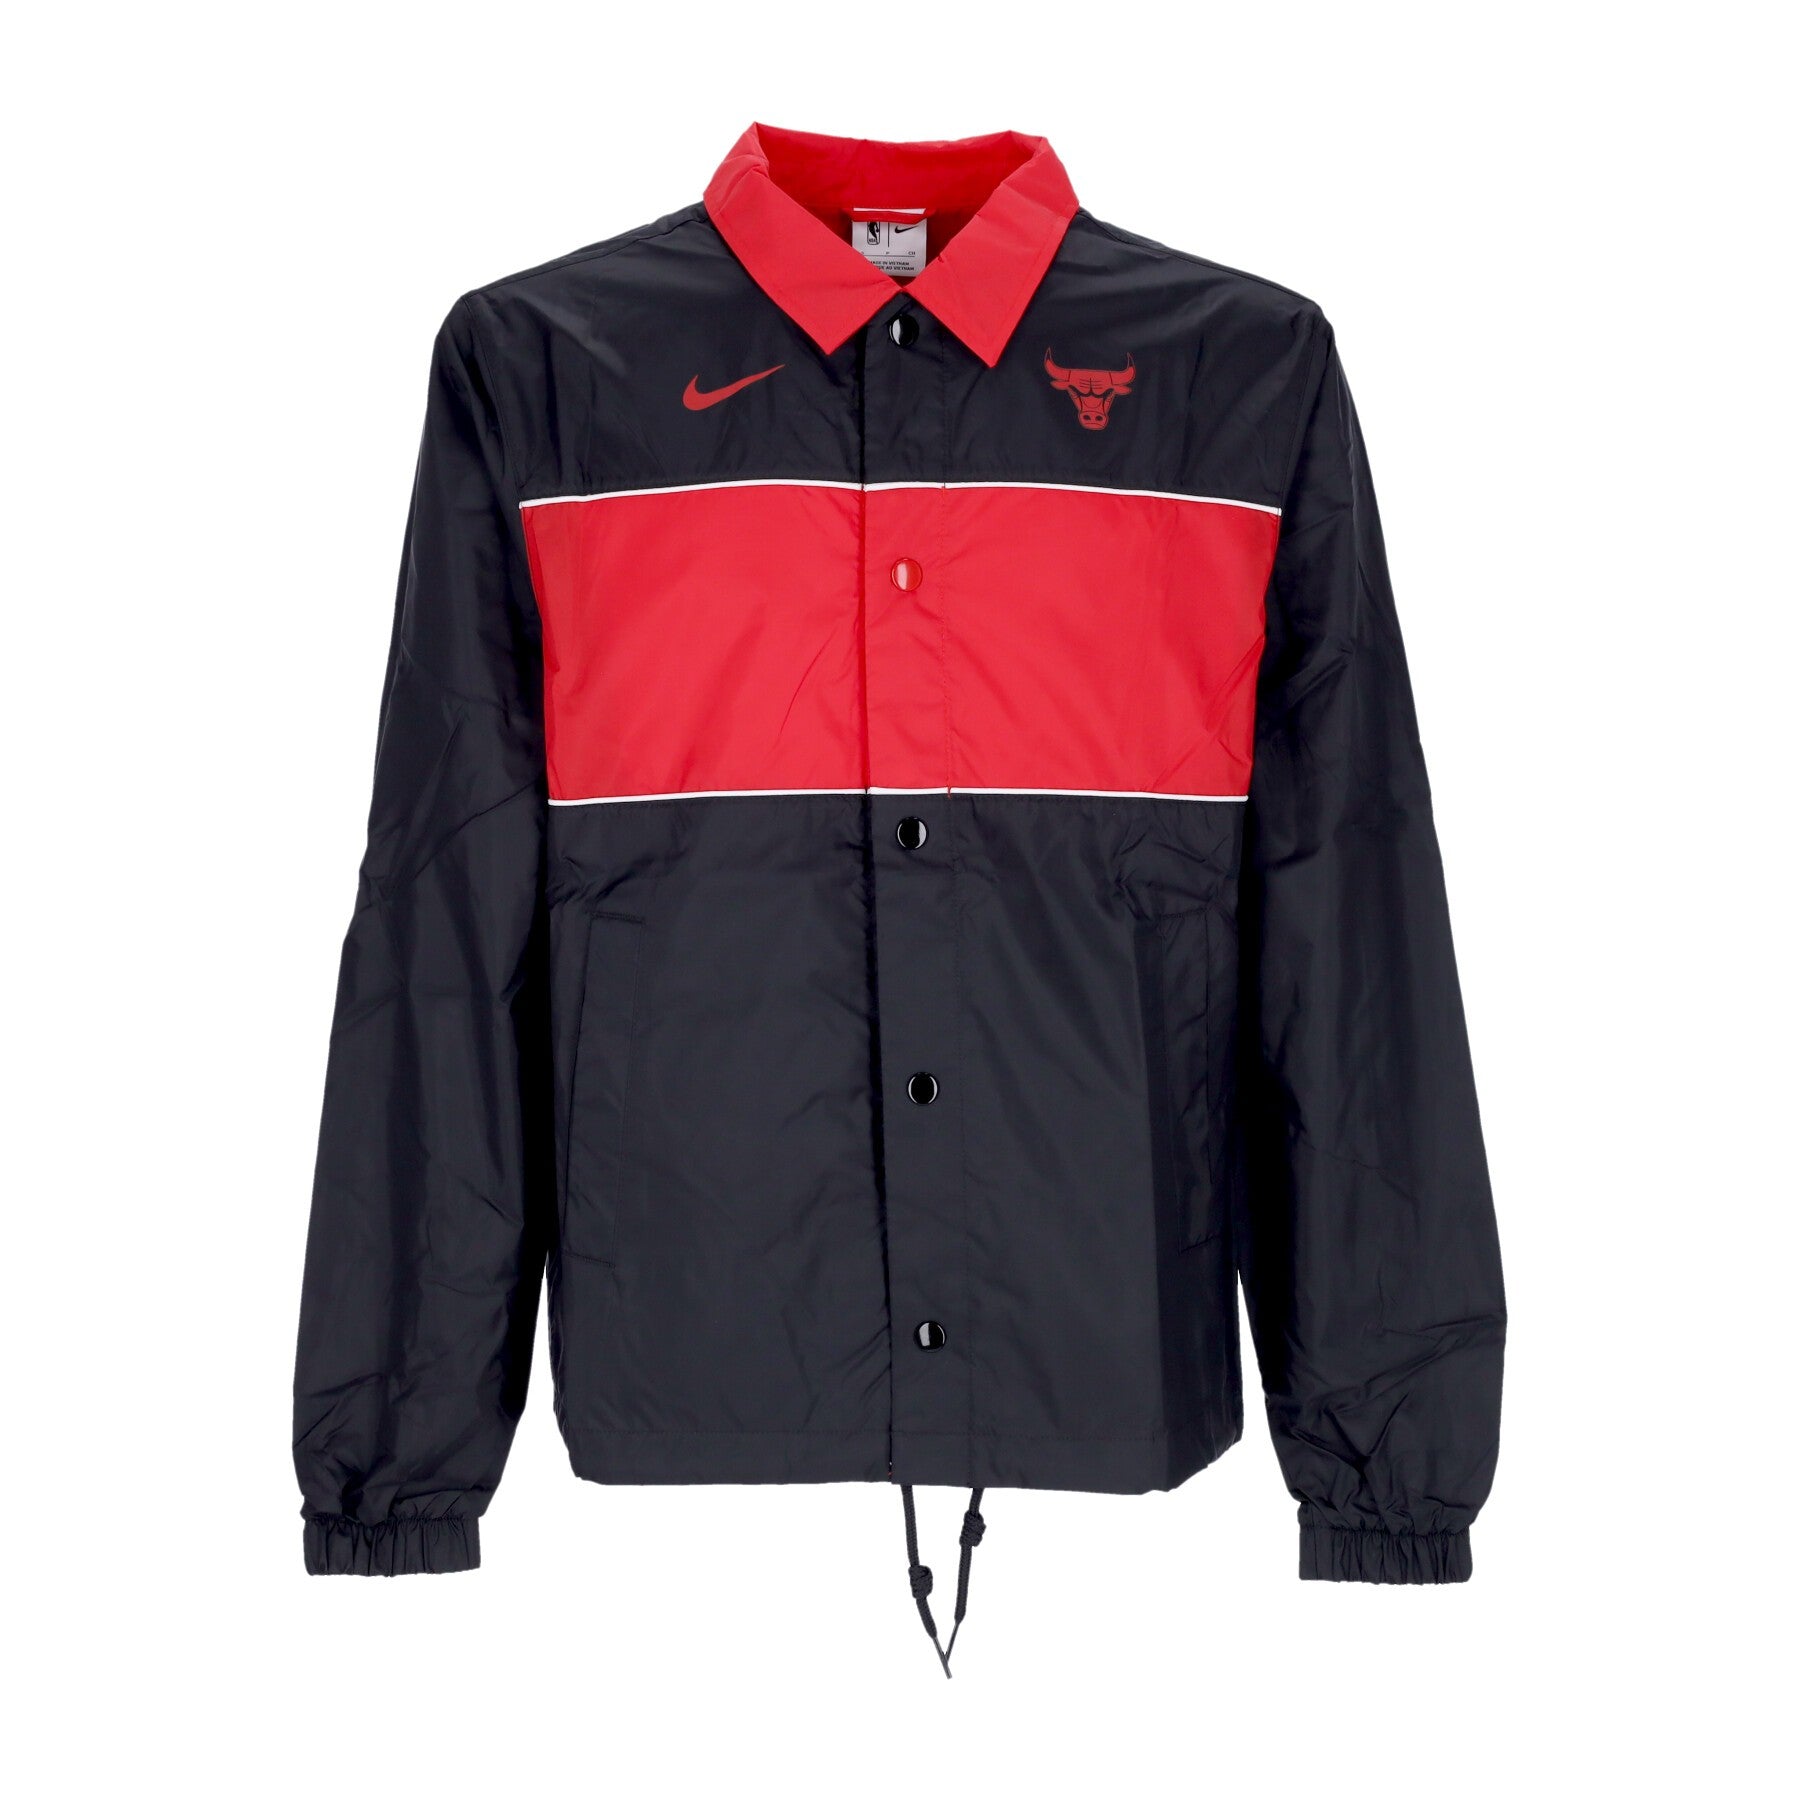 Nike Nba, Giacca Coach Jacket Uomo Nba Full-snap Lightweight Jacket Chibul, Black/university Red/white